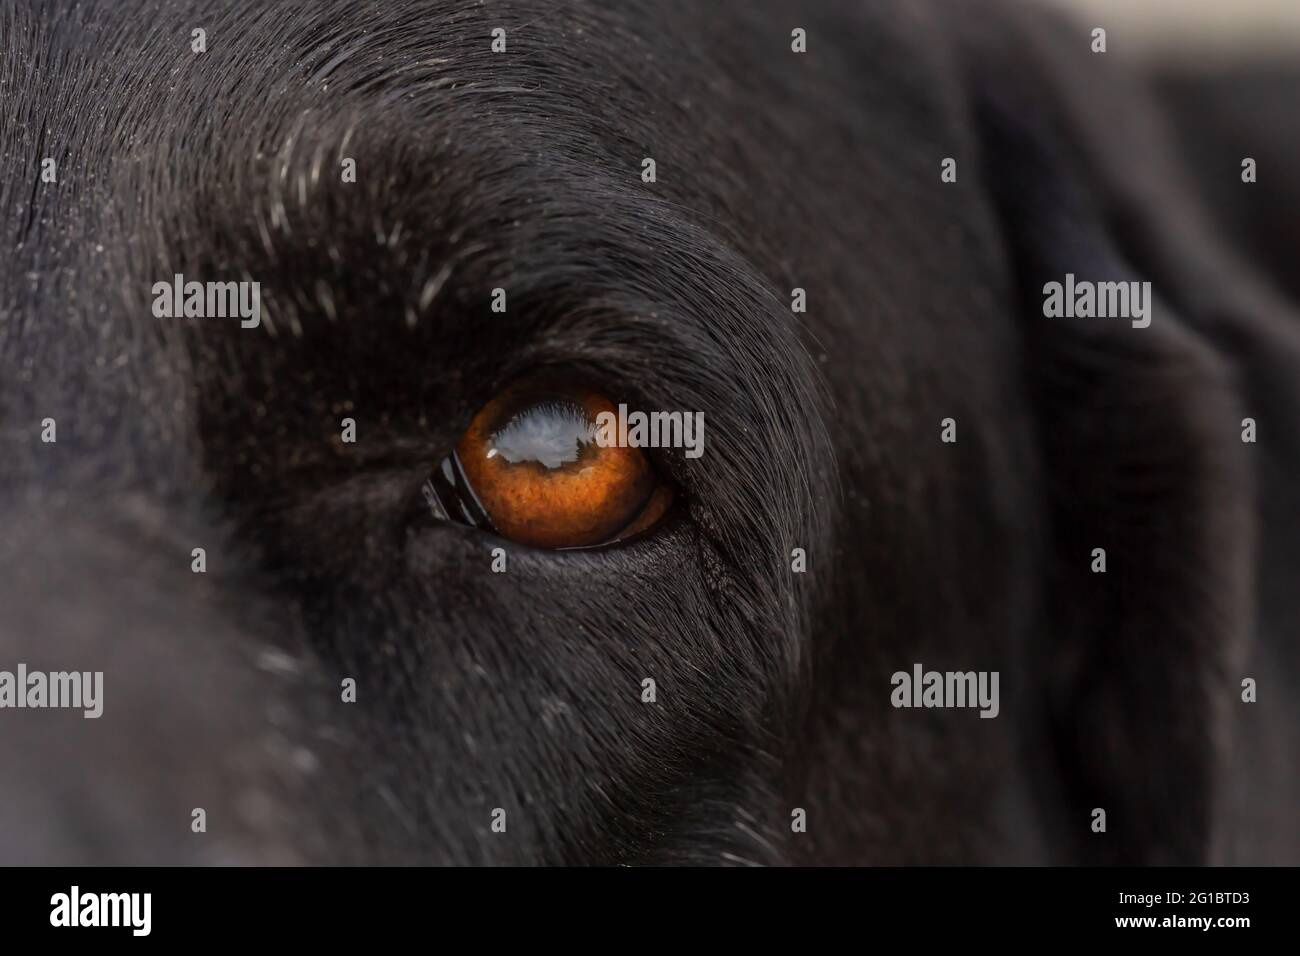 Close-up of a dog eye Stock Photo